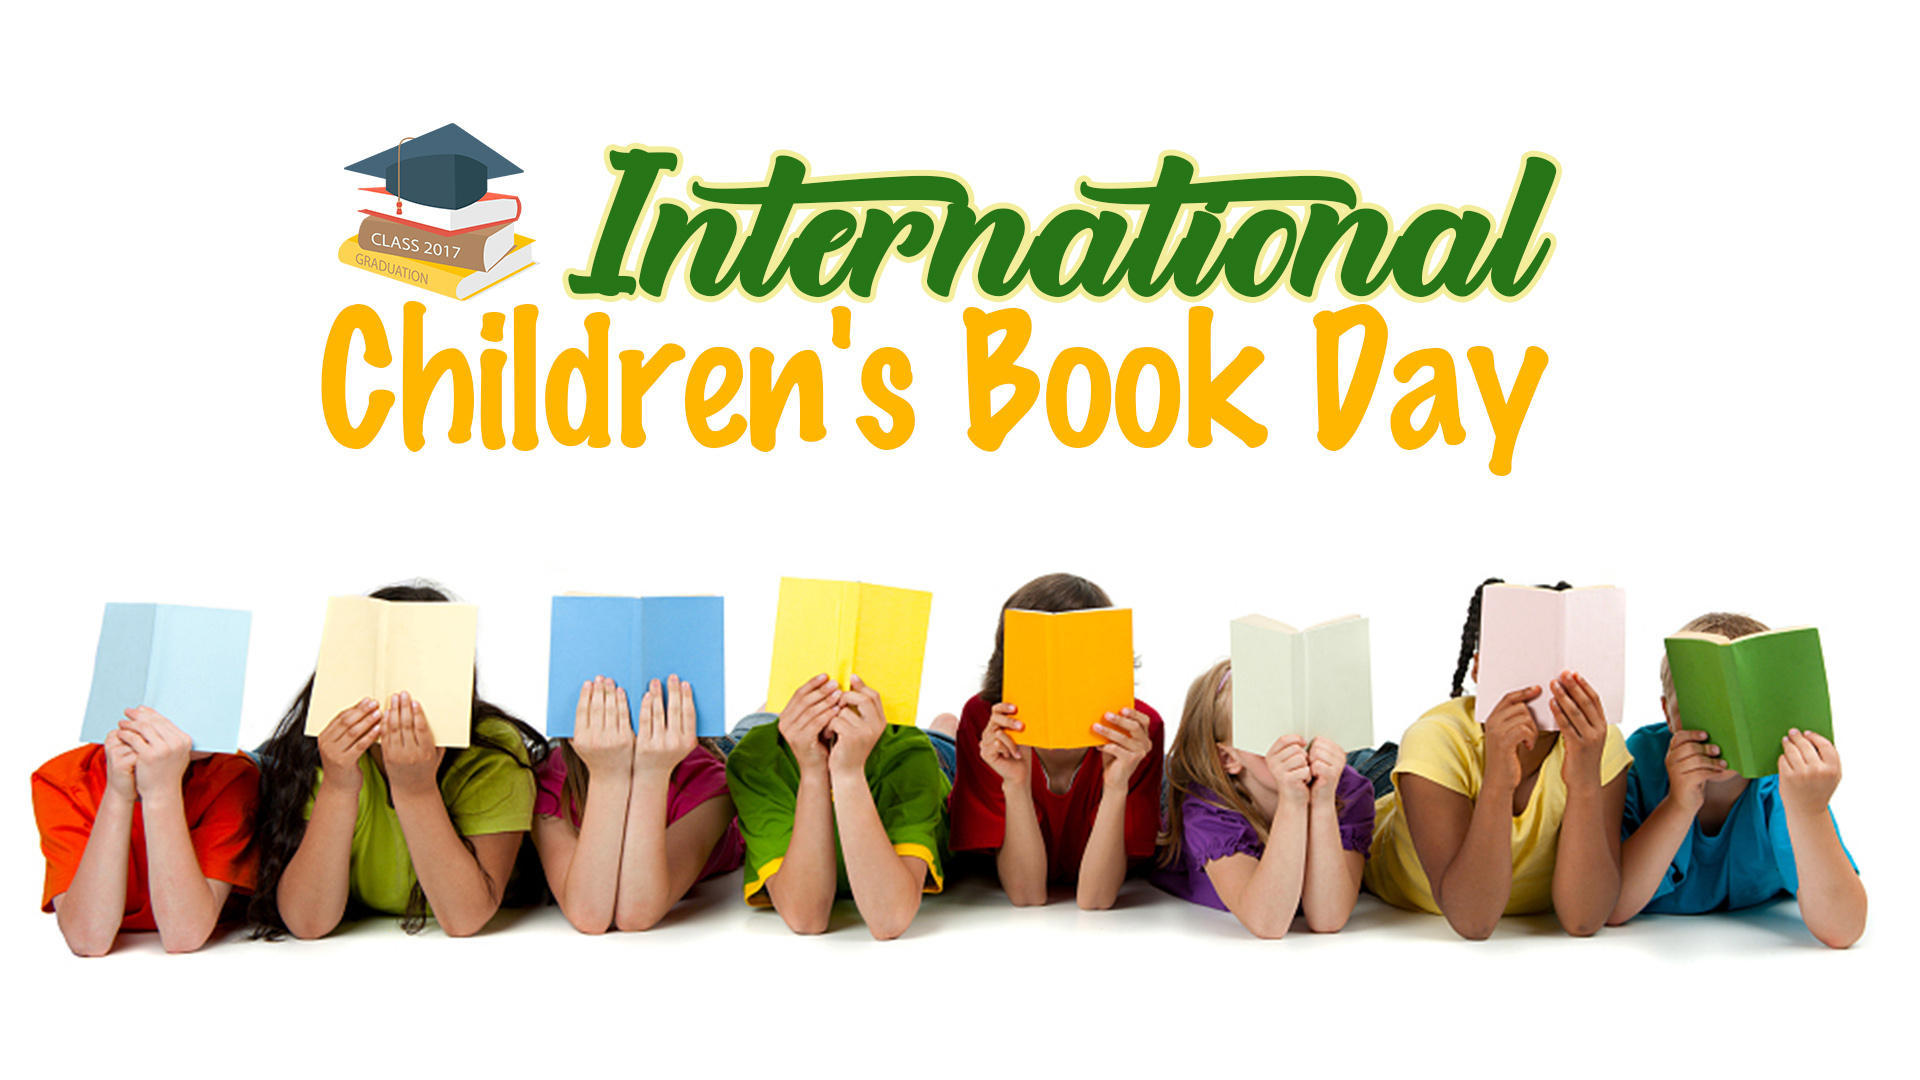 International Children’s Book Day celebrates on 02 April